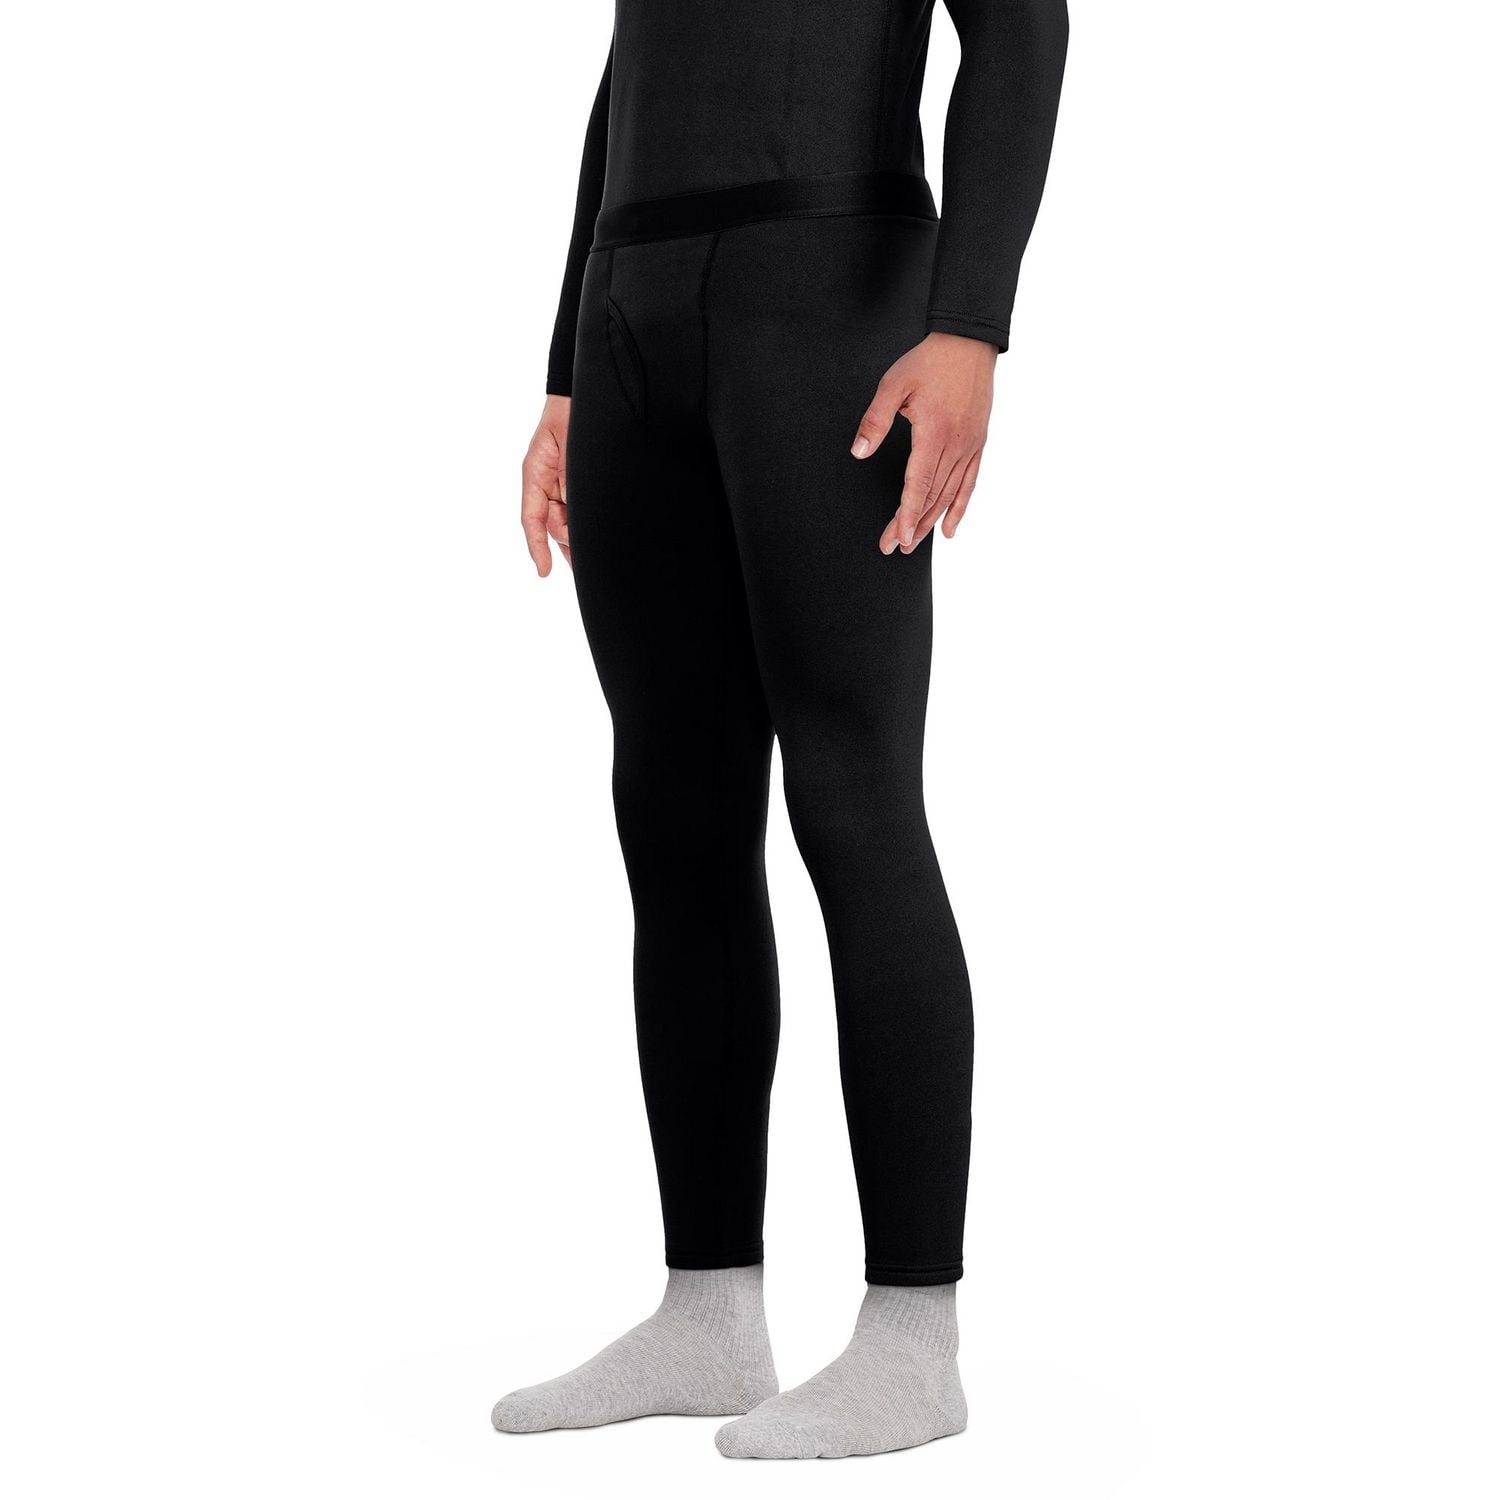 Versatile Men's Sports Leggings Thermal Pajama Pants Available in M 2XL  Sizes